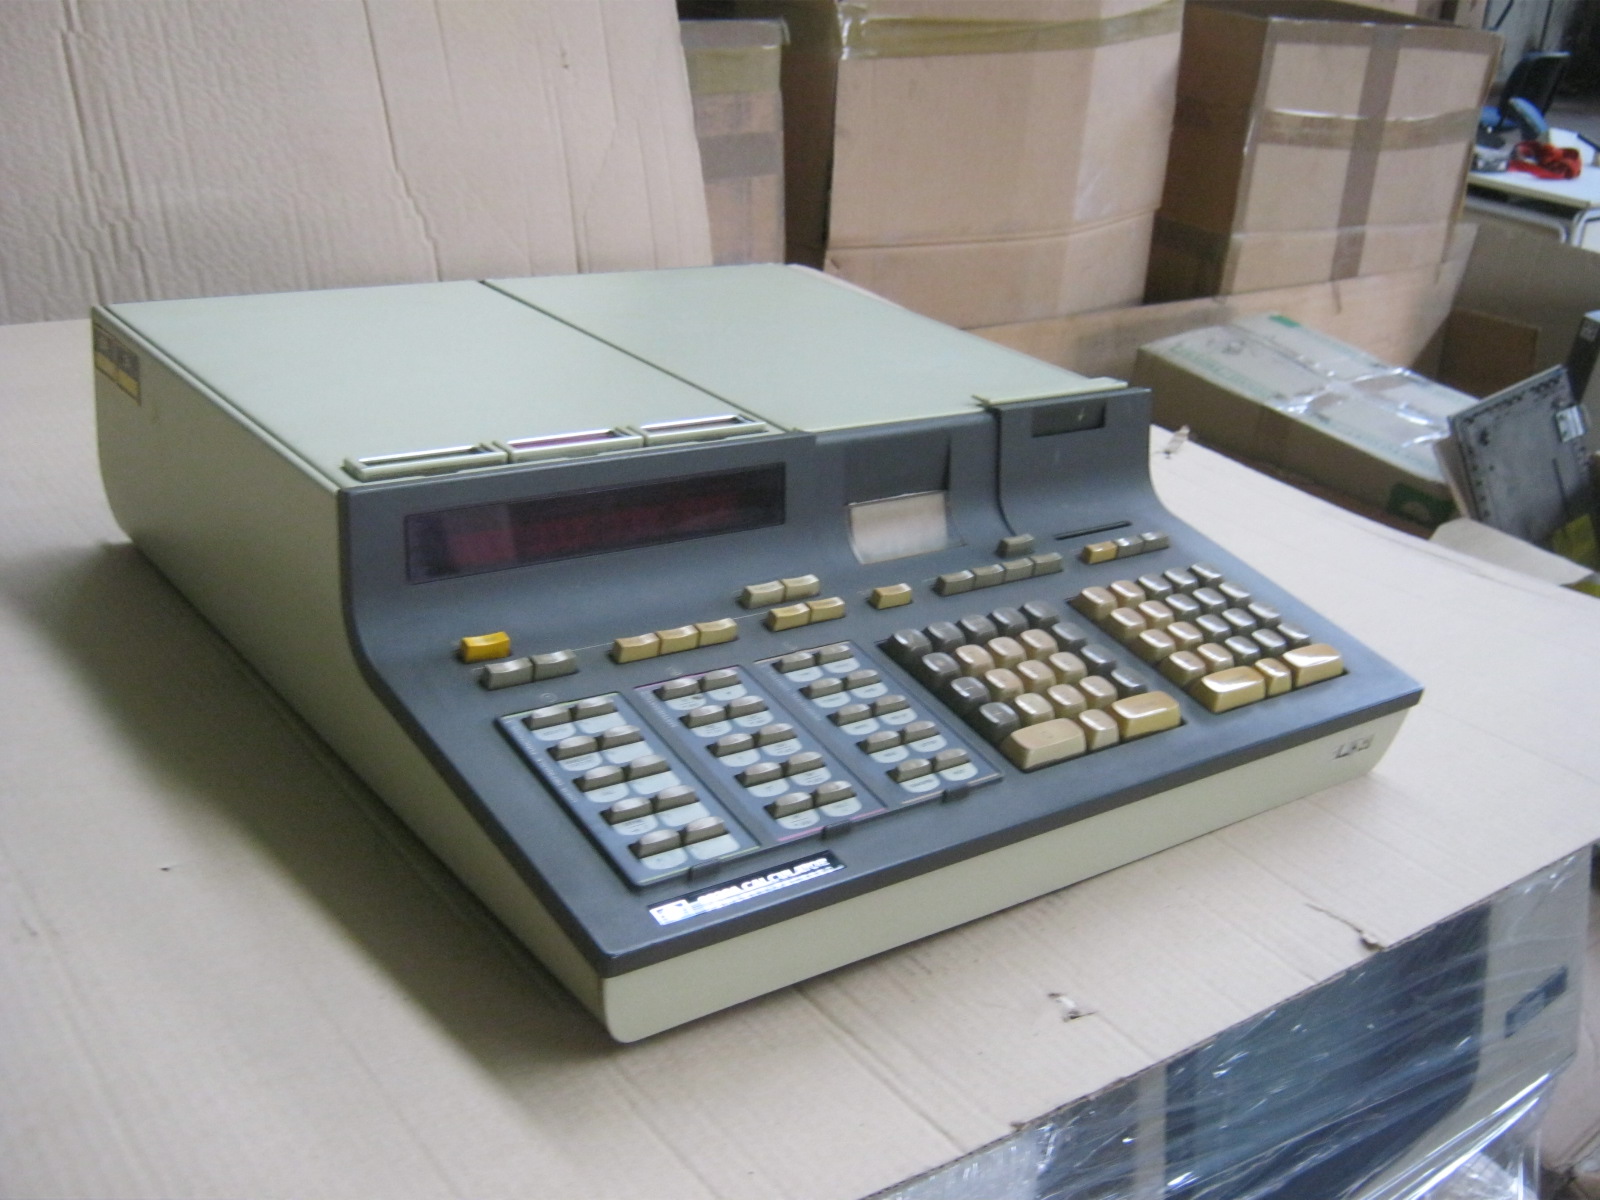 http://museodelcomputer.org/parts/hp/calculators/HP9820A/IMG_8263_hp9820.JPG